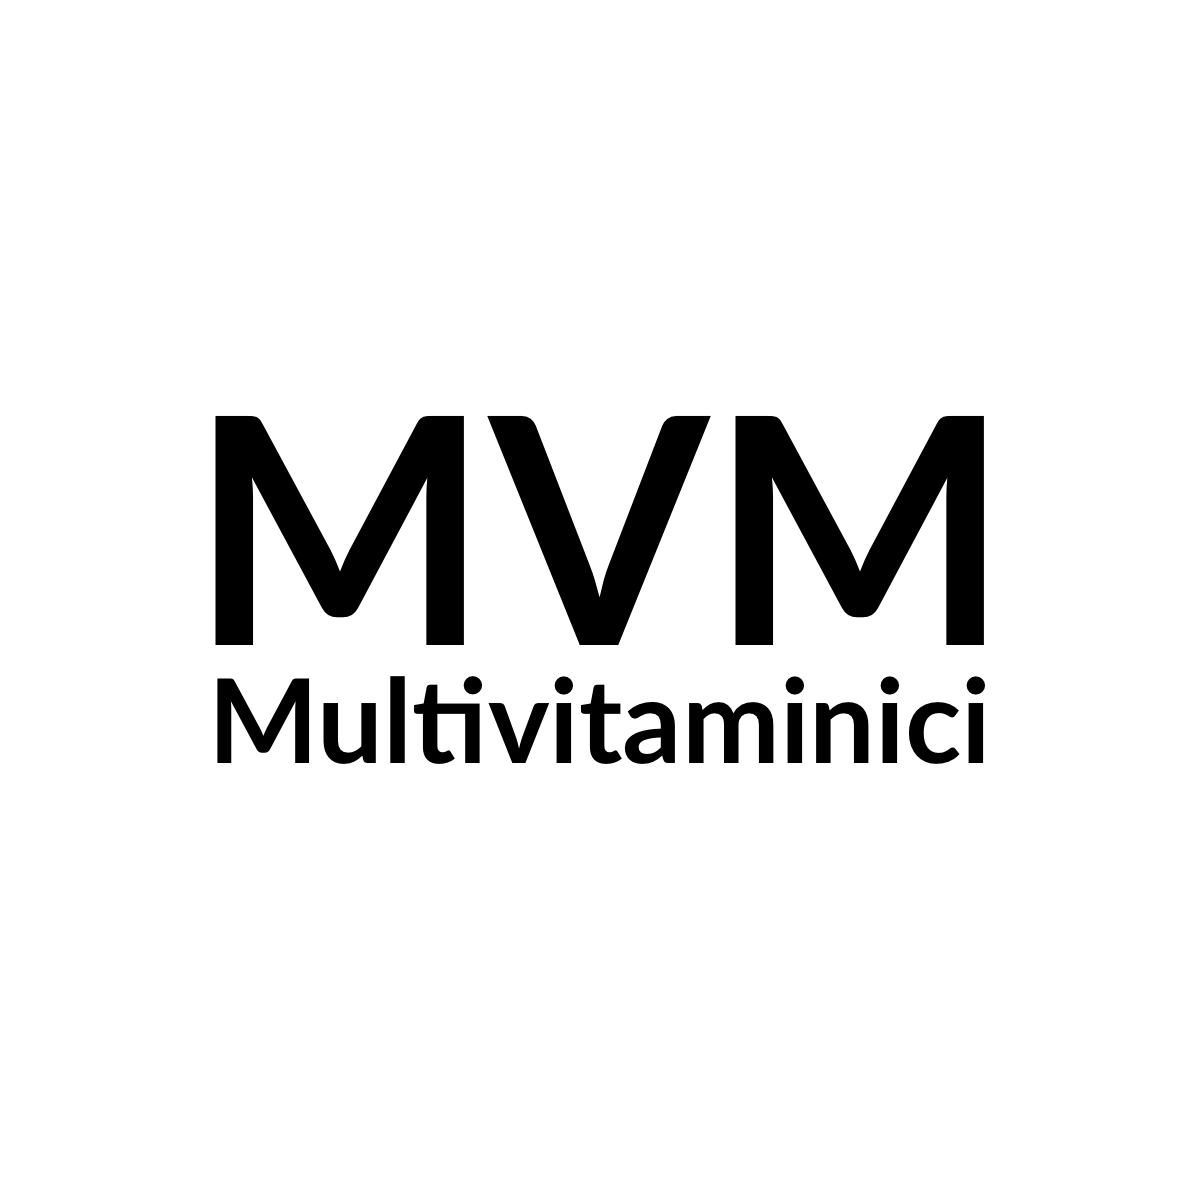 MultiVitaminici